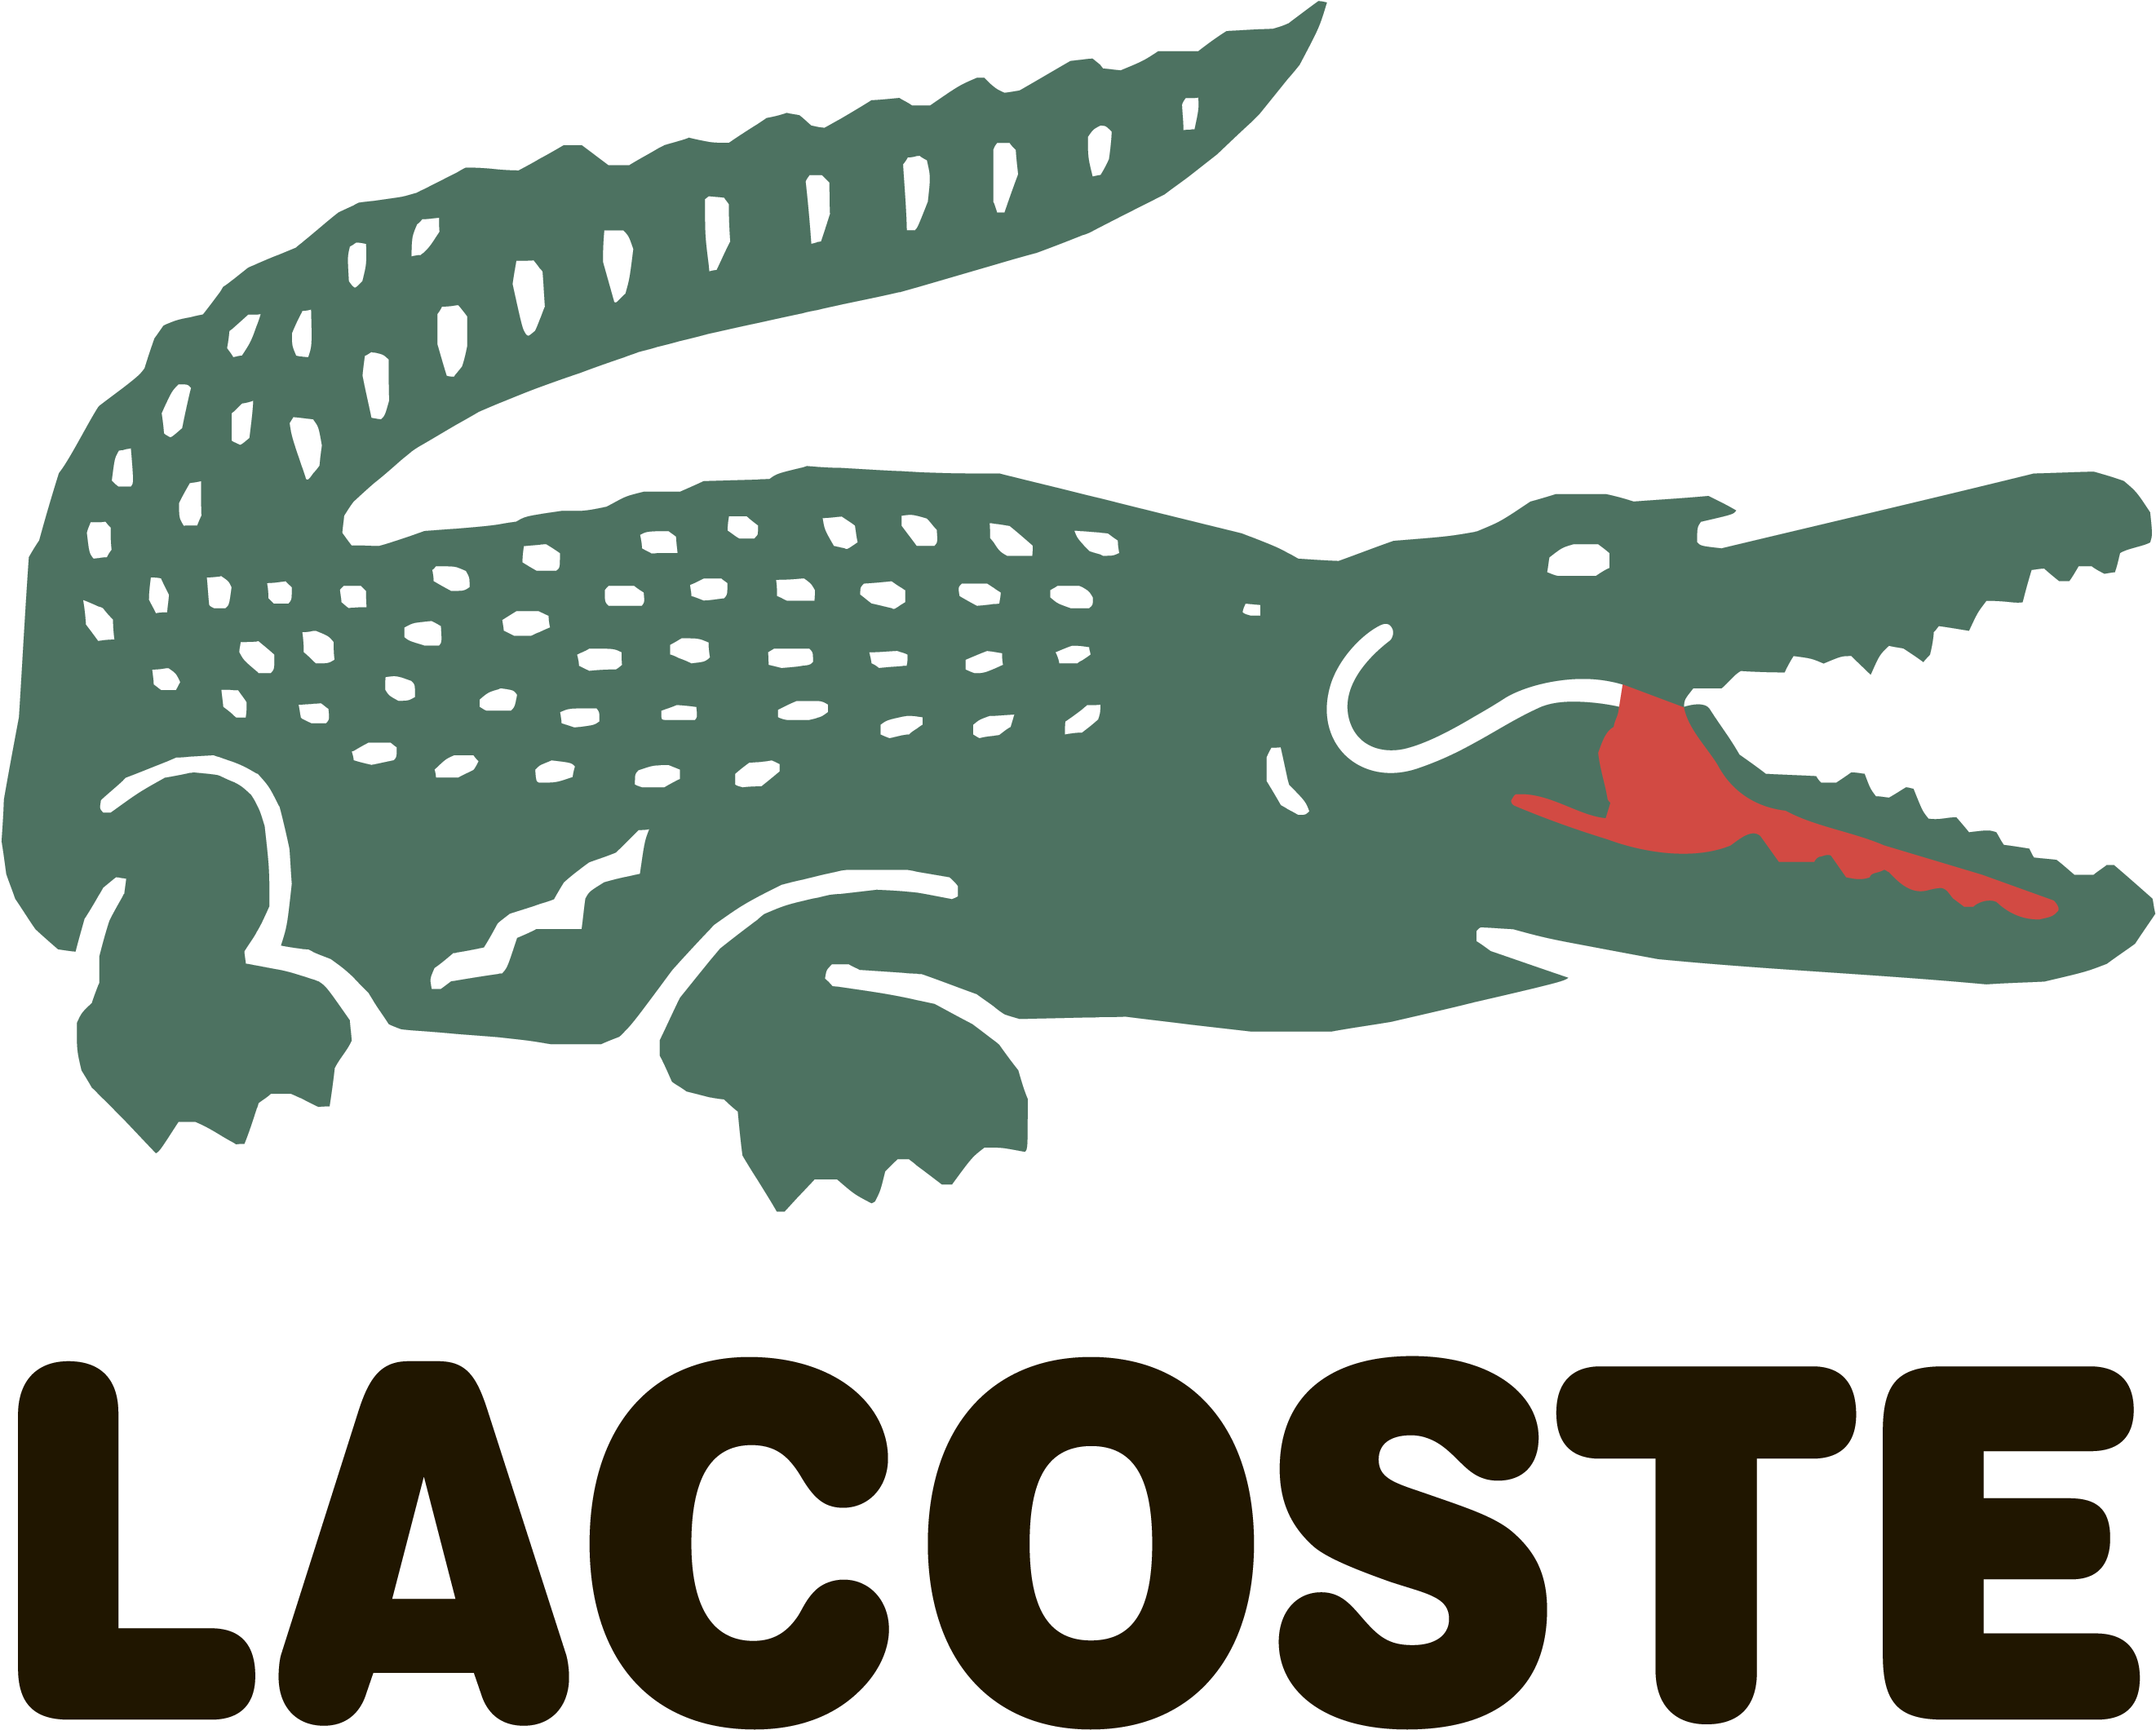 Lacoste Logo Png Lacoste Crocodile Image Picture Logo - vrogue.co